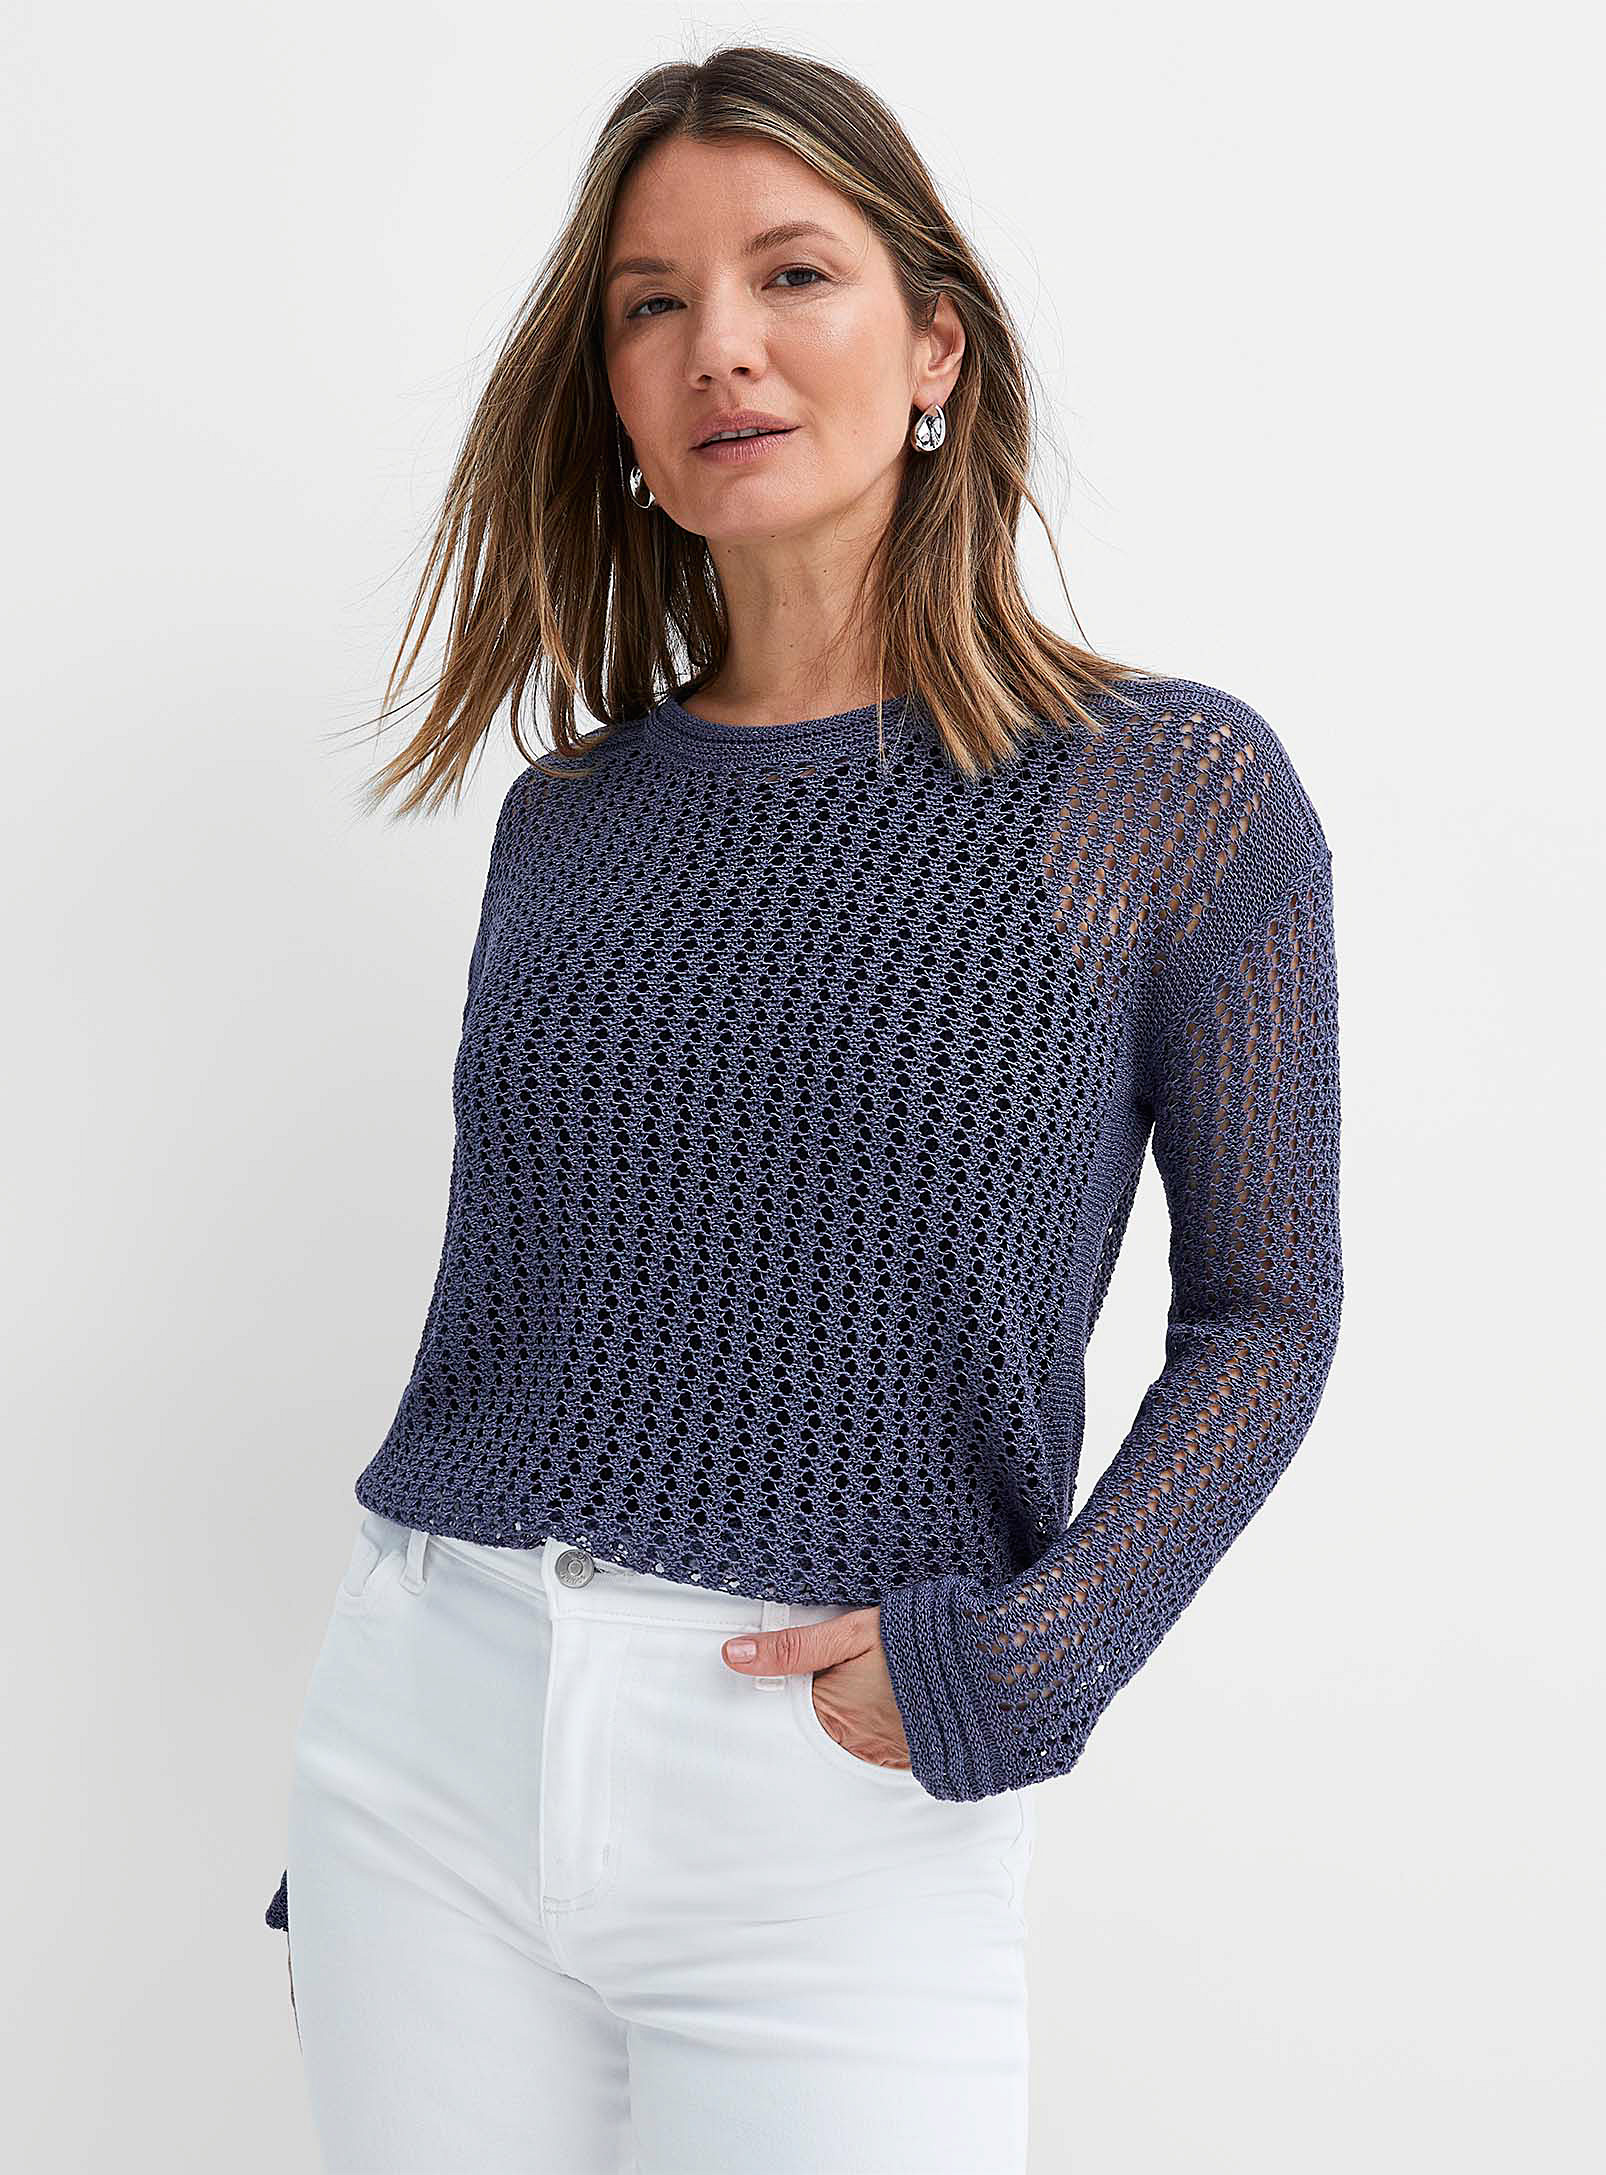 Contemporaine - Women's Lustrous sheen openwork sweater